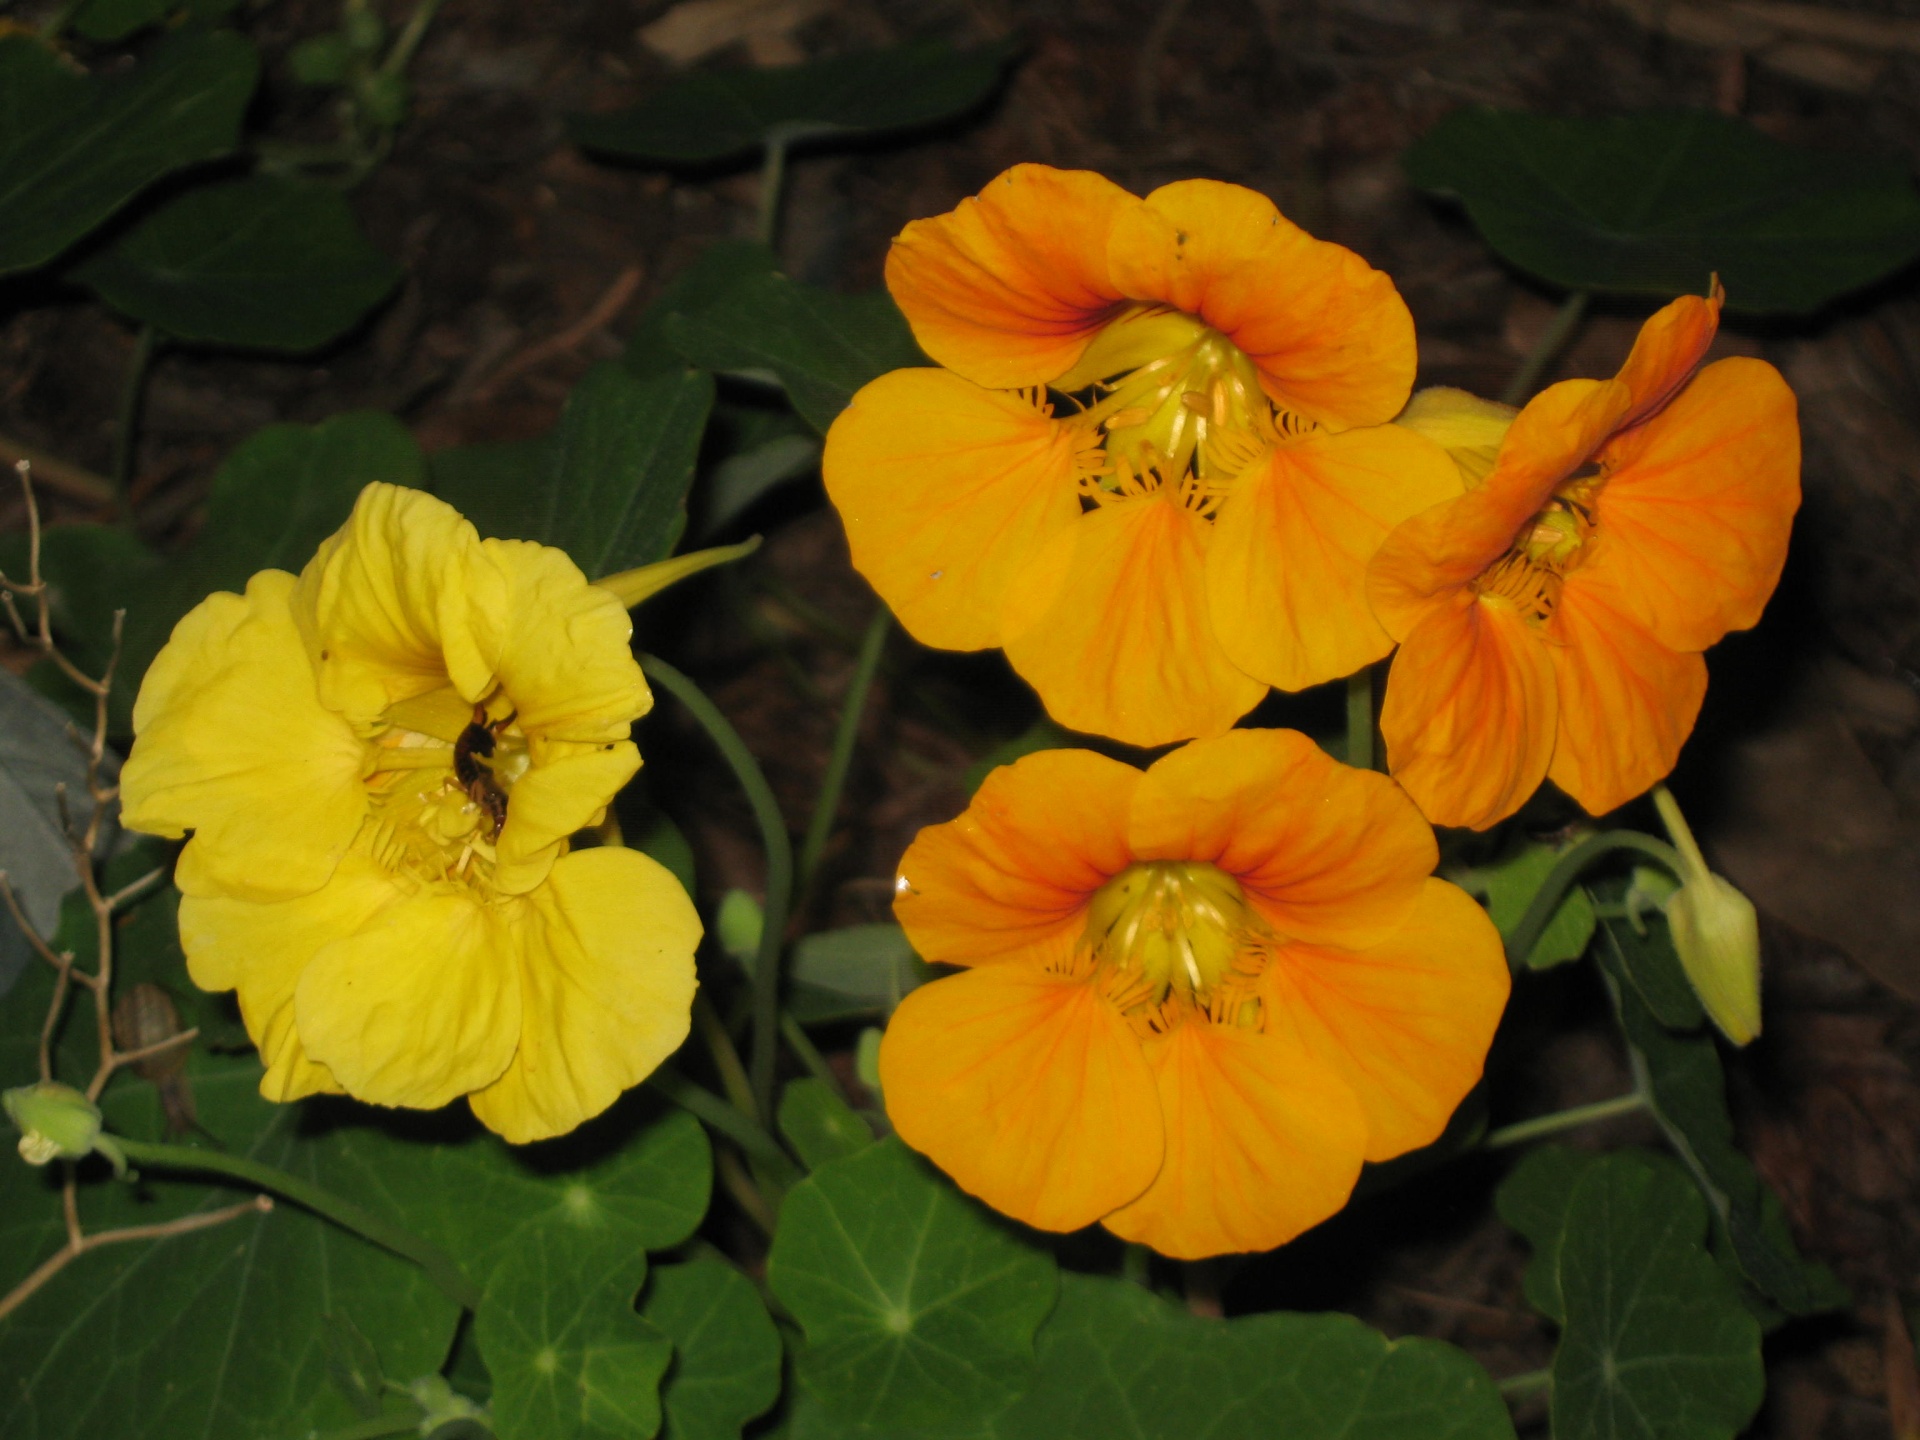 Yellow and orange nasturtiums in my garden